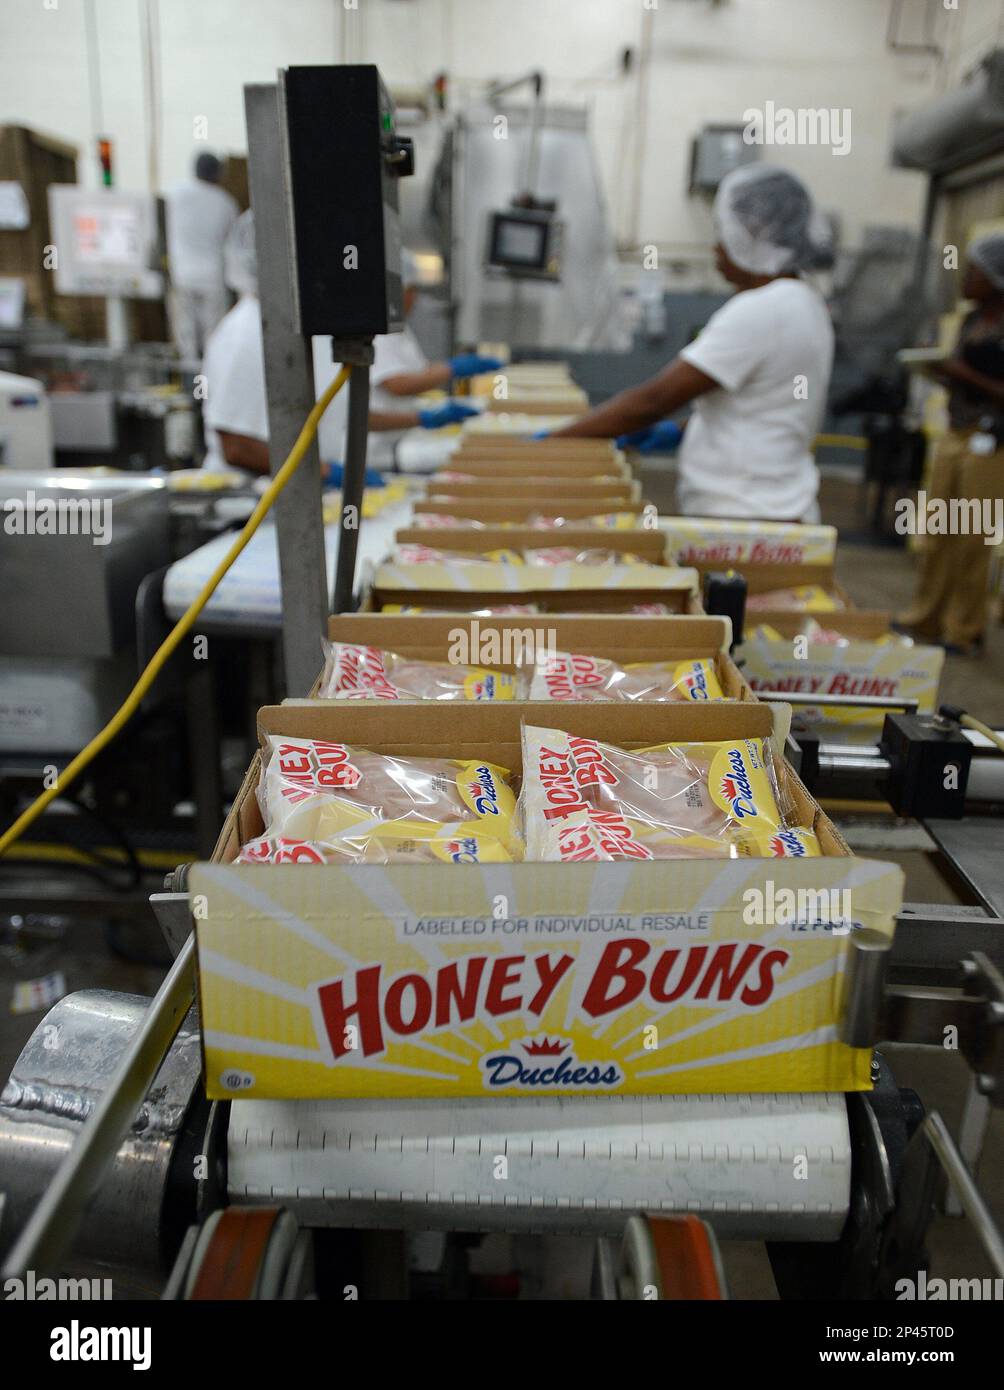 Creative Loafing names Carolina Foods' honey buns a “signature” smell -  Duchess